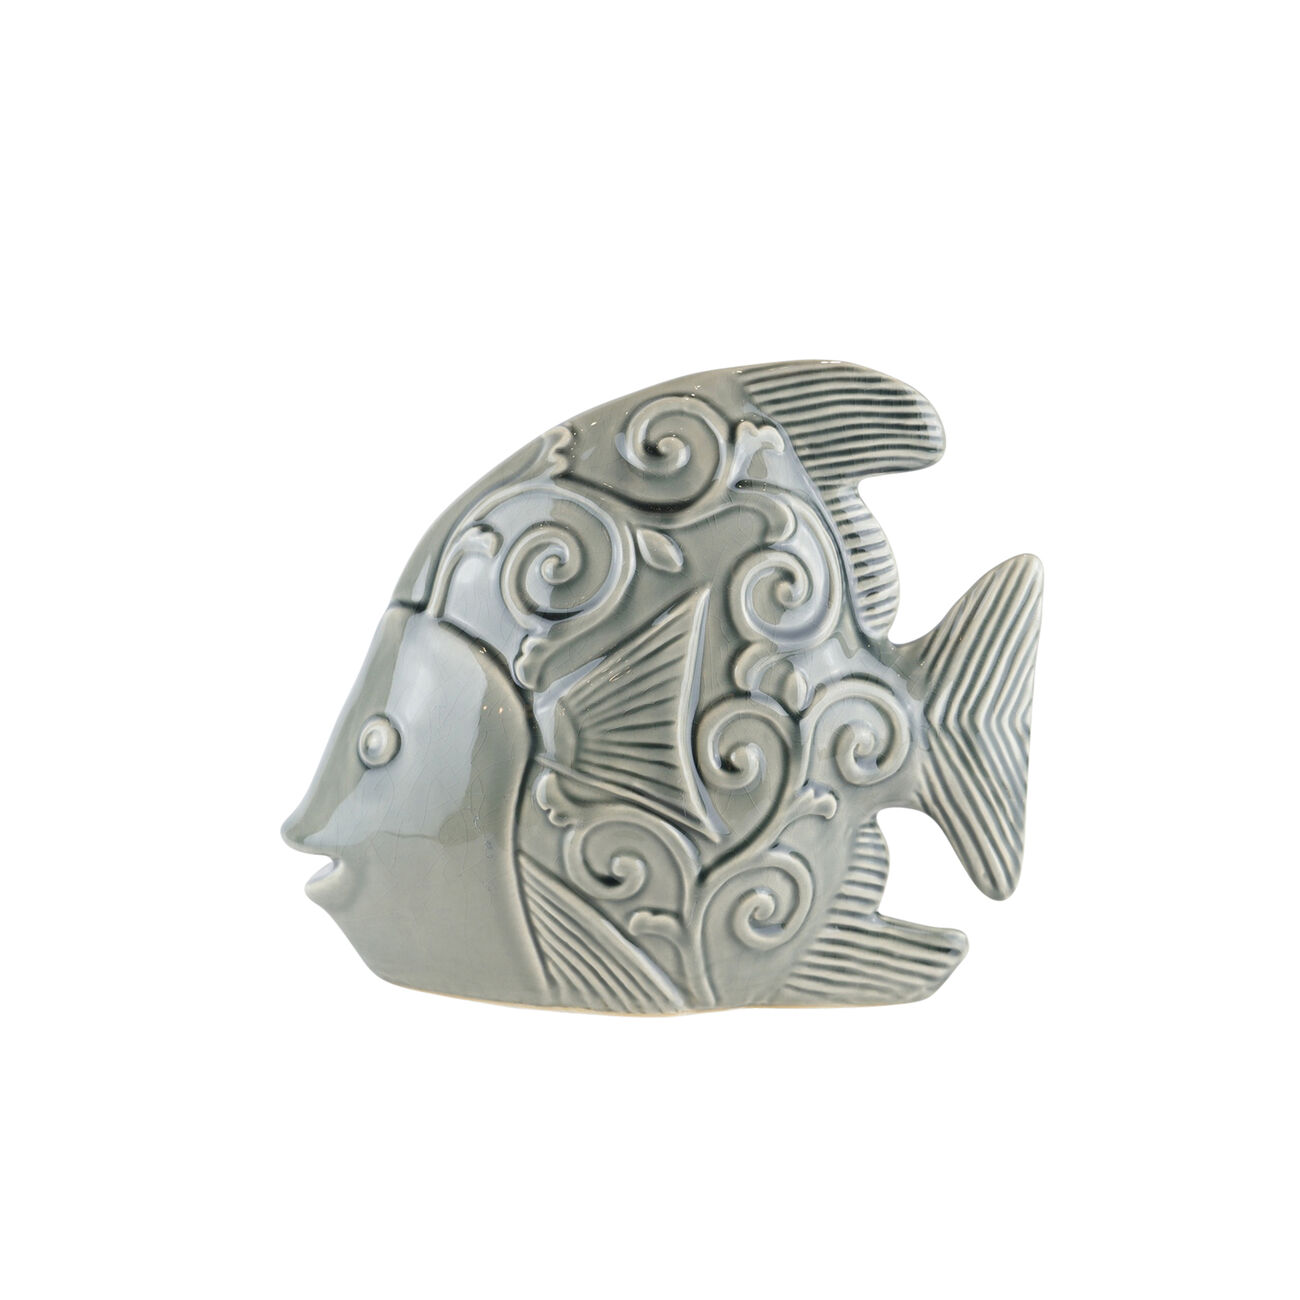 CeramicDecorative Fish Figurine with Swirl Motifs, Gray